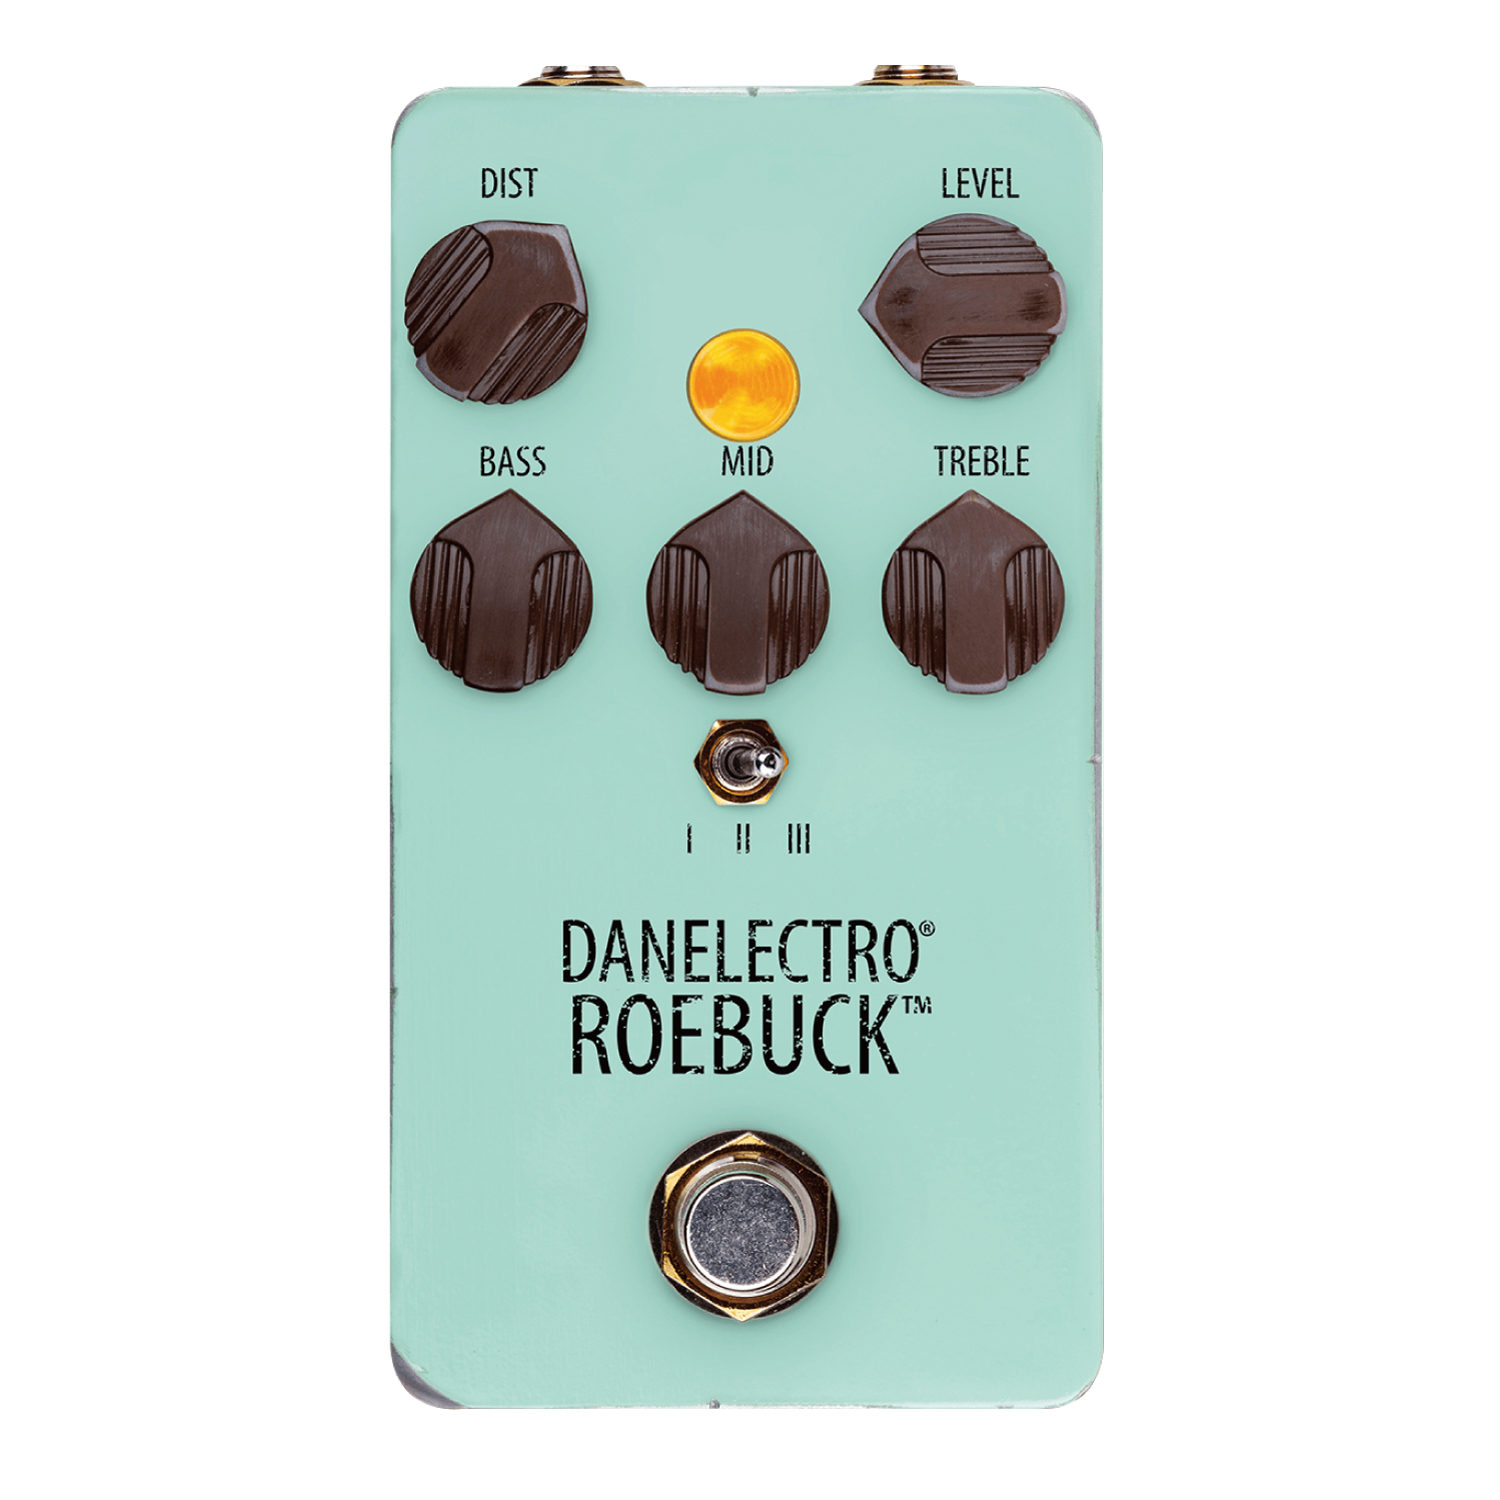 Danelectroエフェクター | 商品カテゴリー | キクタニミュージック